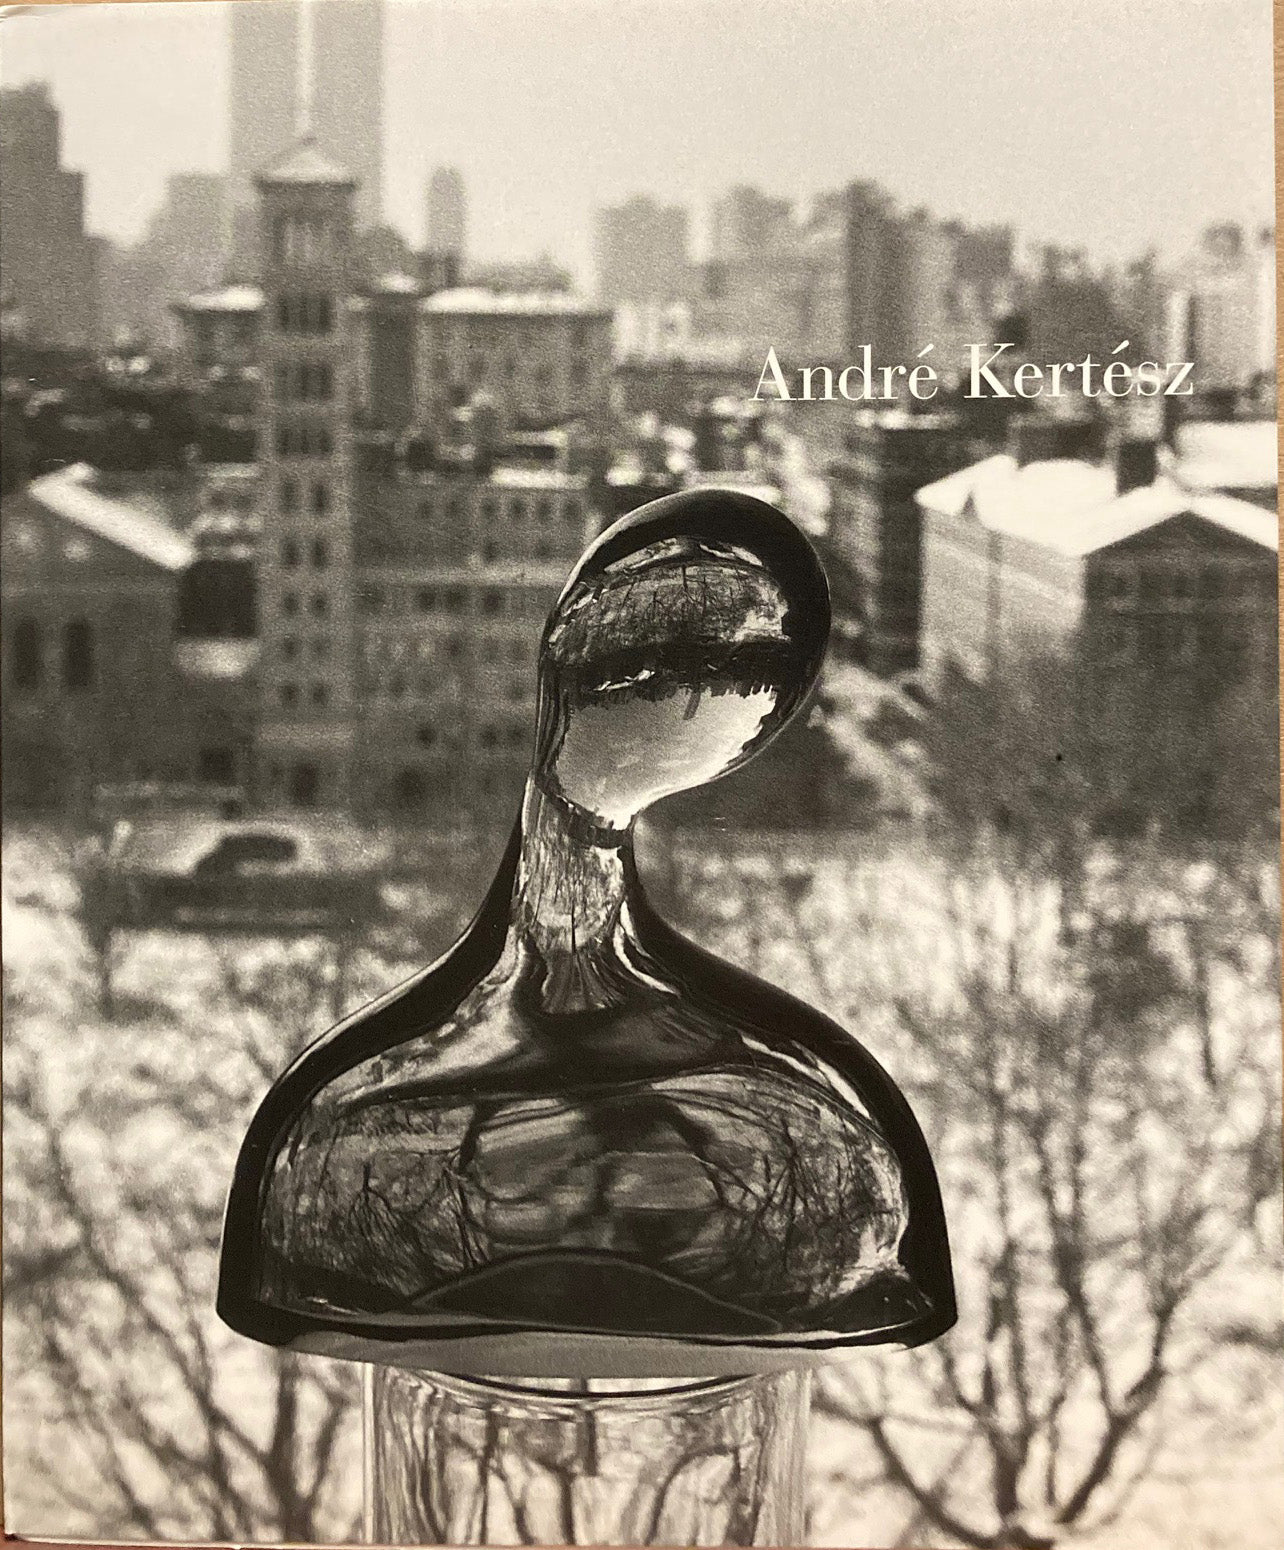 Kertesz, Andre. Andre Kertesz: New York State of Mind.